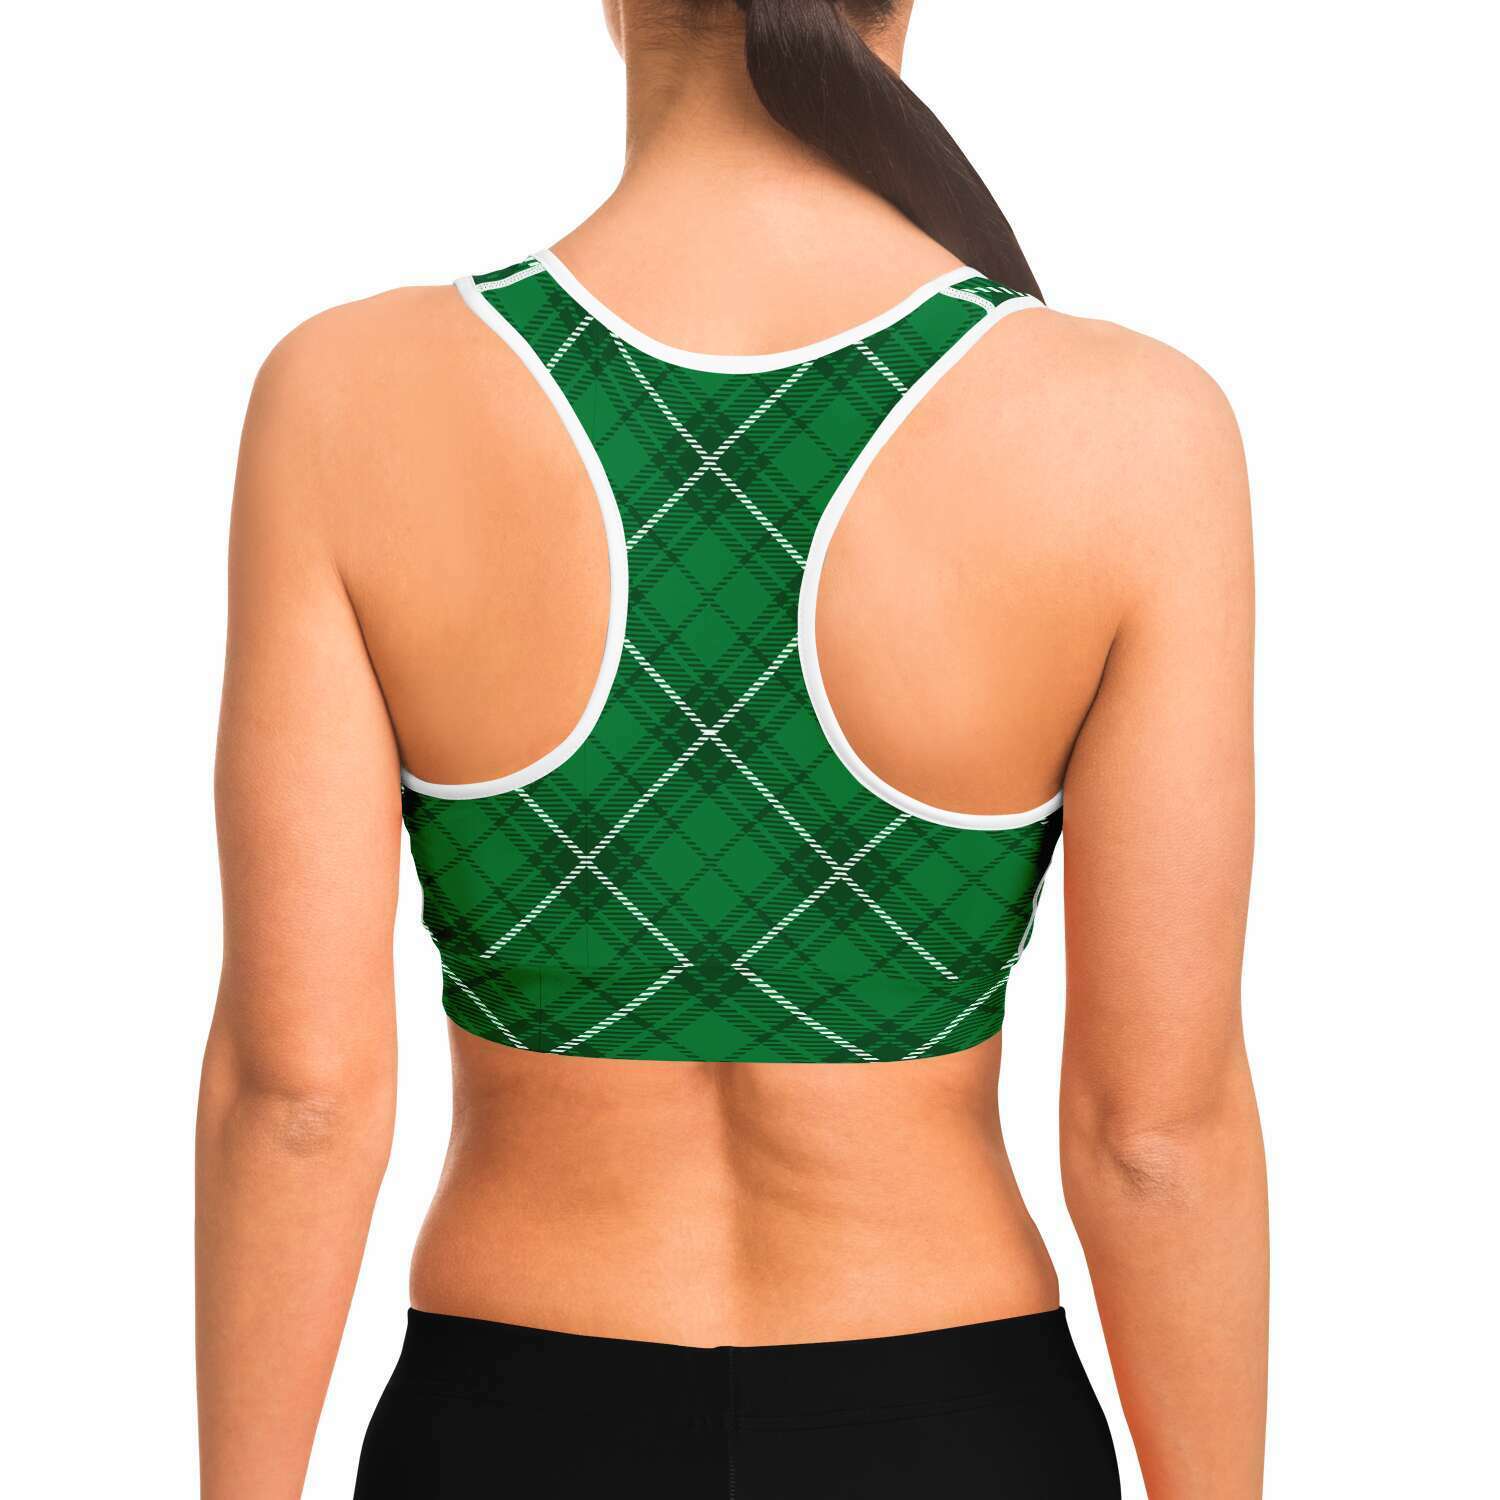 Women's Tradition Irish Green Plaid Athletic Sports Bra Model Back